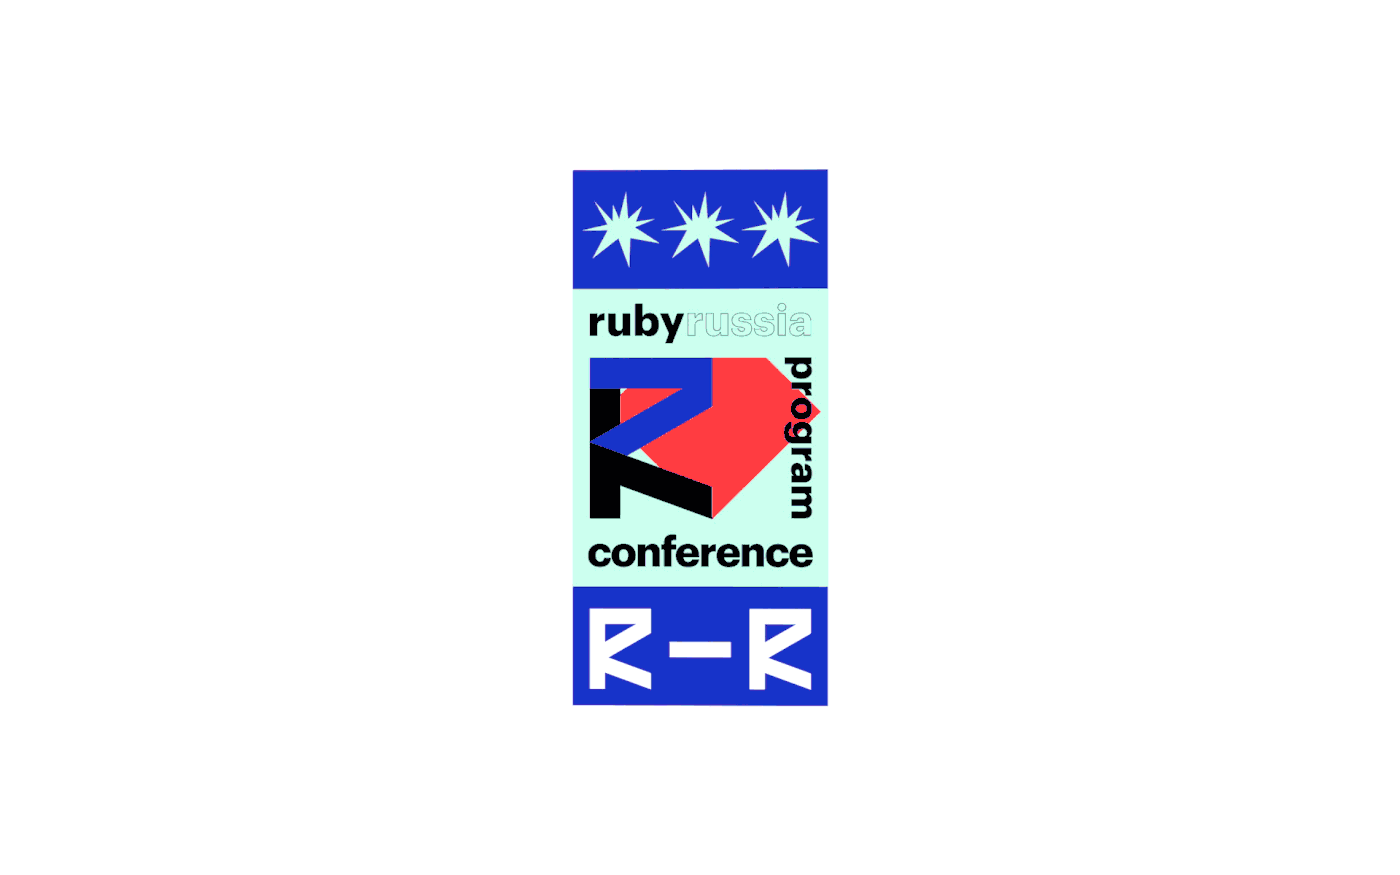 ruby Russia conference RubyOnRails ror developer programming  Event community vrgame